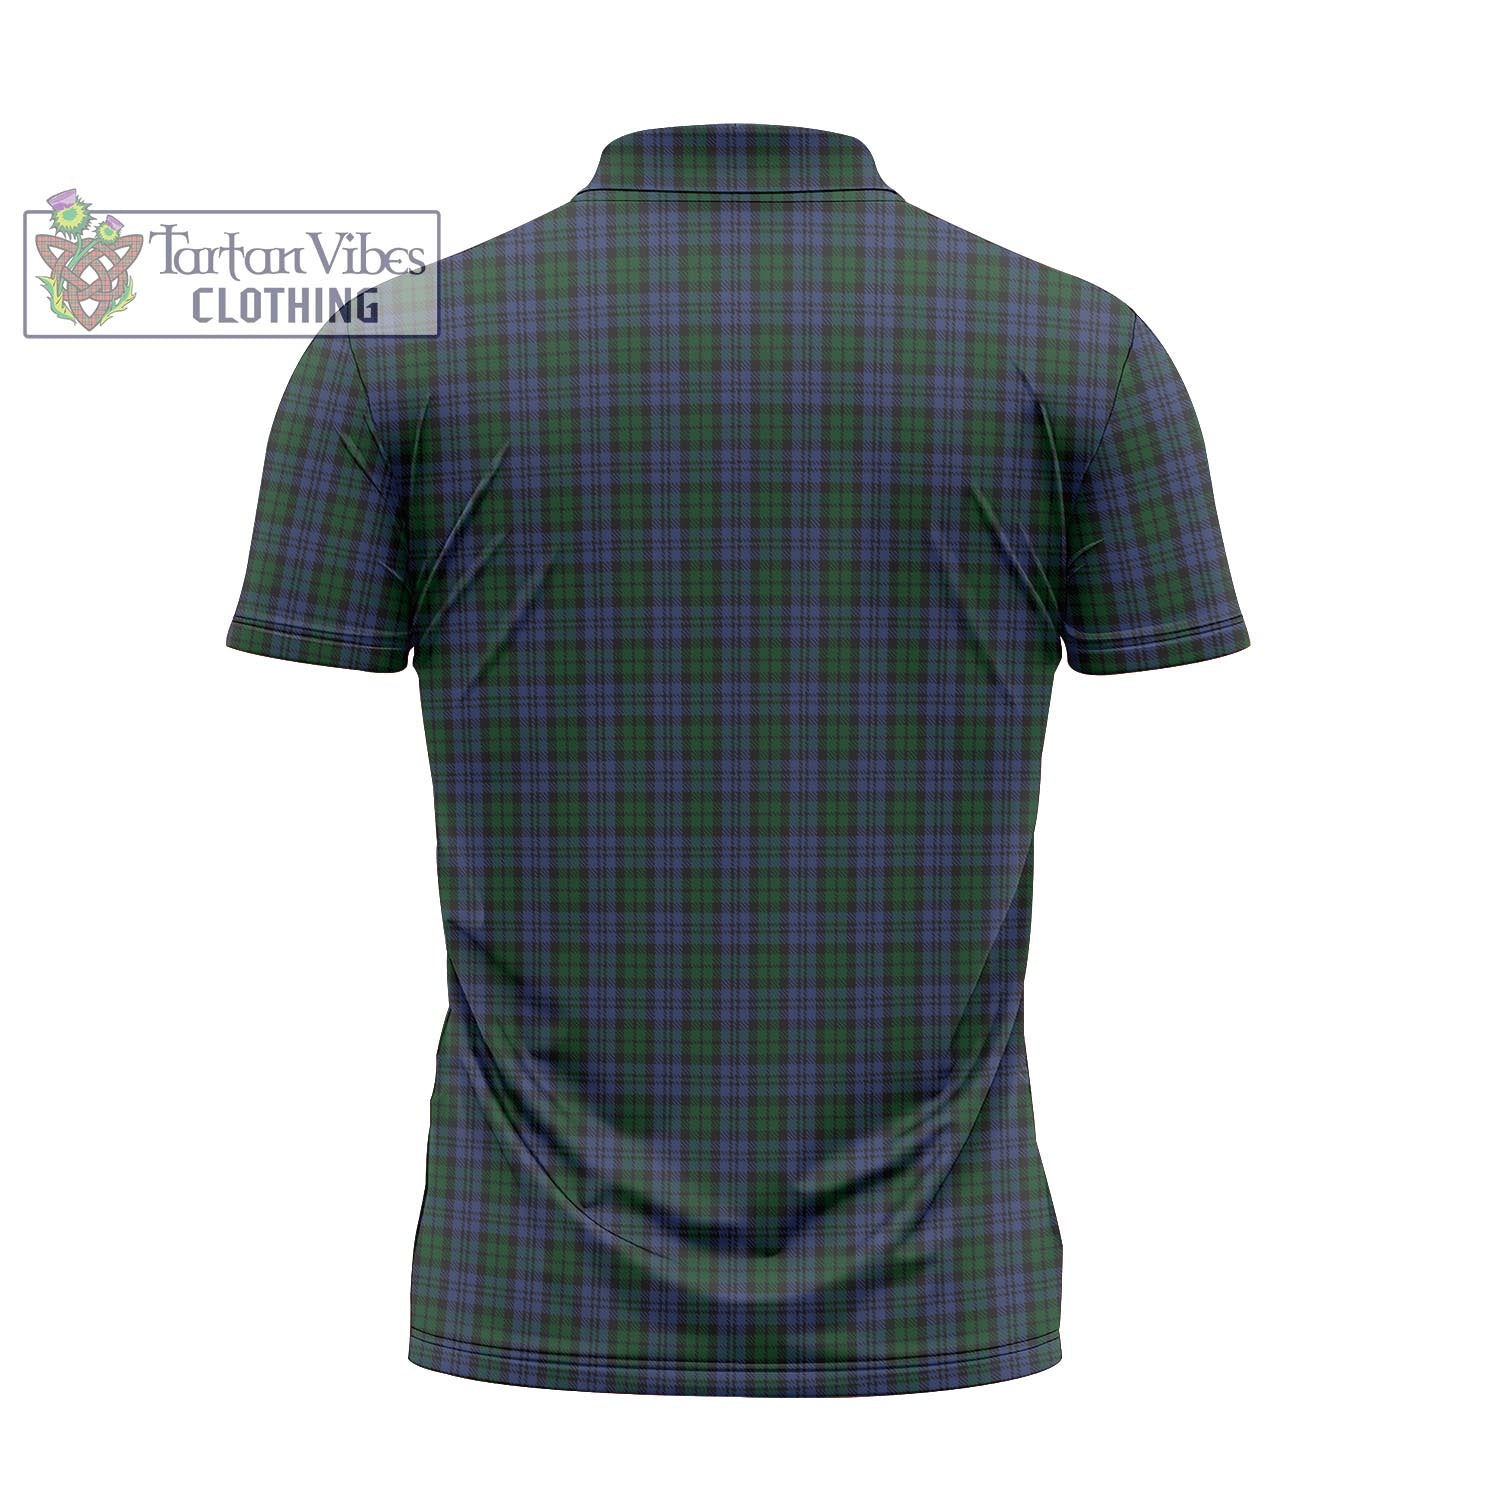 Tartan Vibes Clothing Sutherland Tartan Zipper Polo Shirt with Family Crest